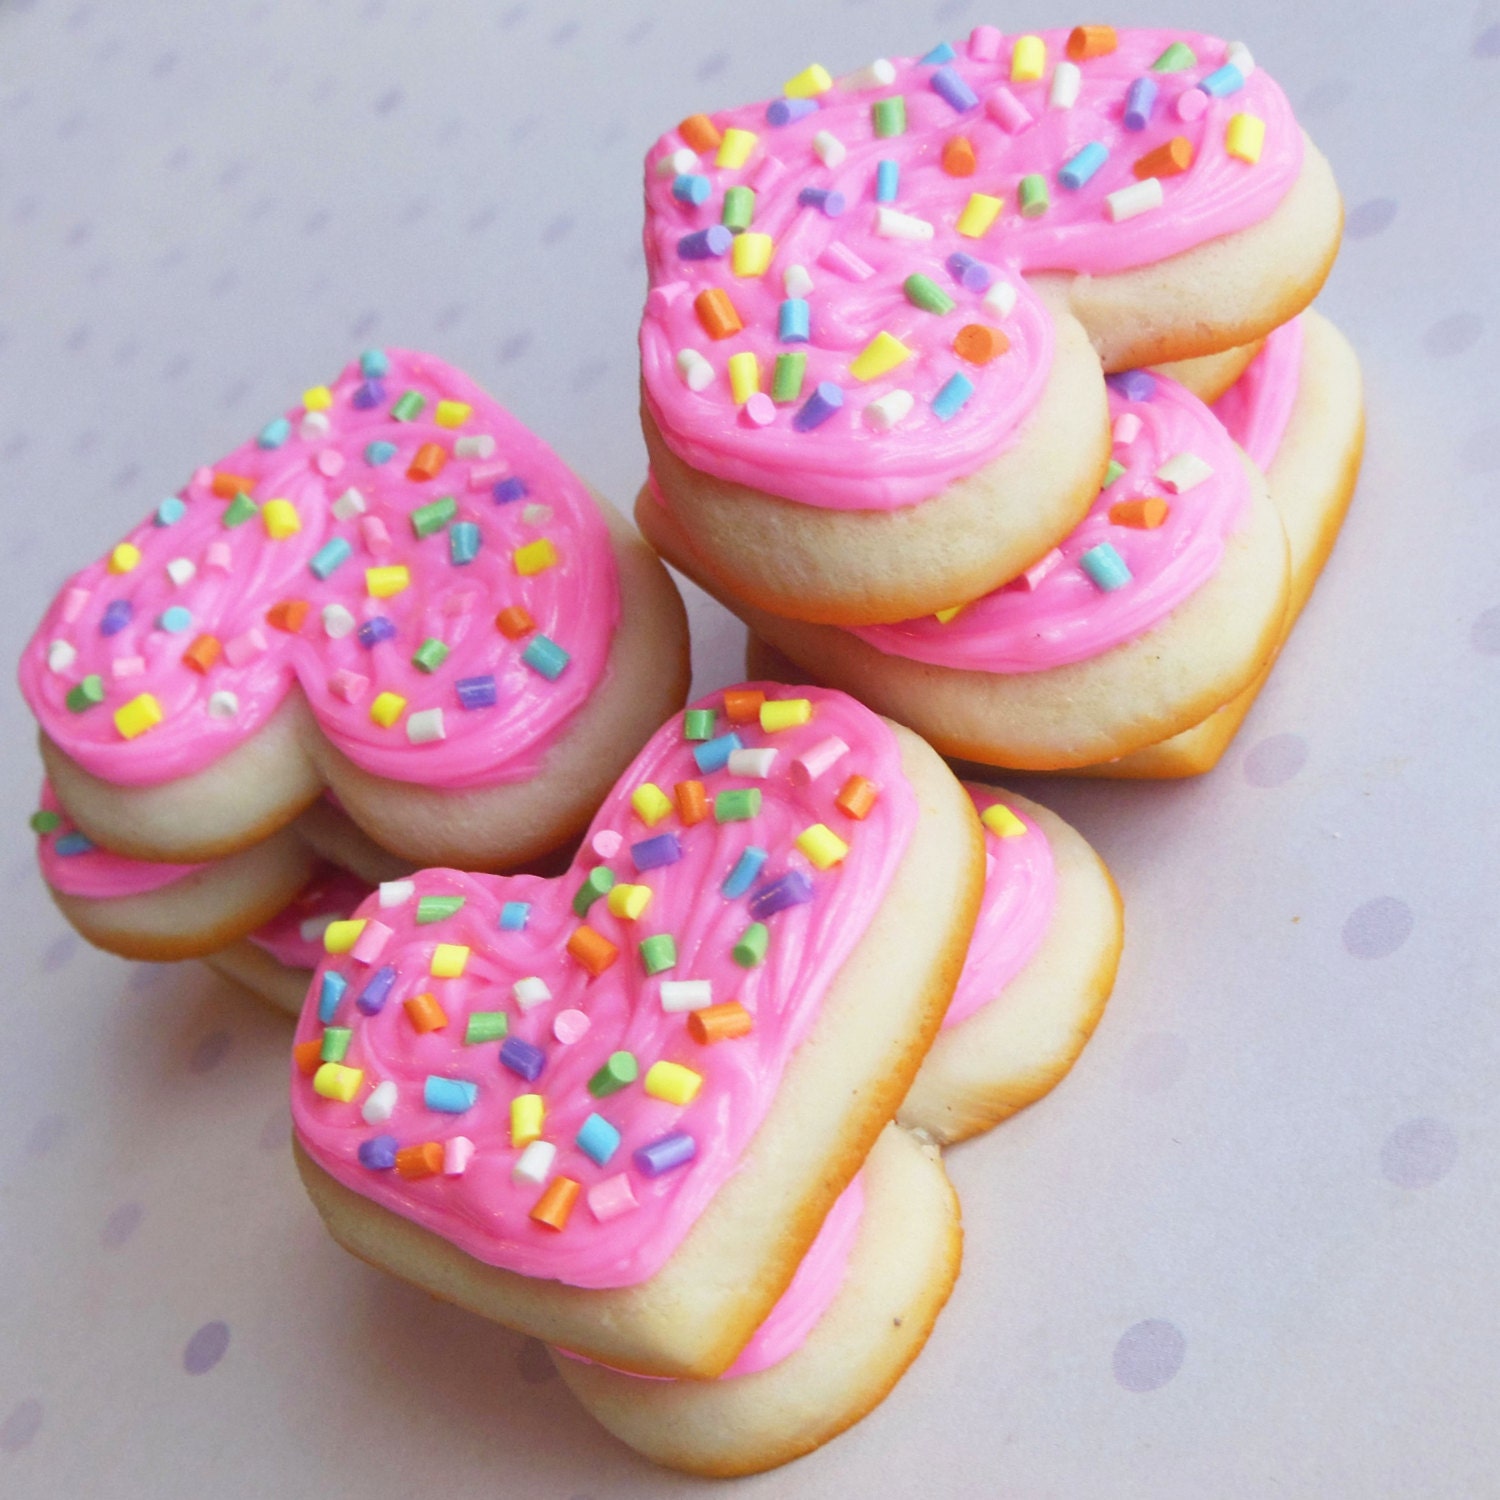 one pastel sprinkled pink frosting sugar cookie polymer clay magnet